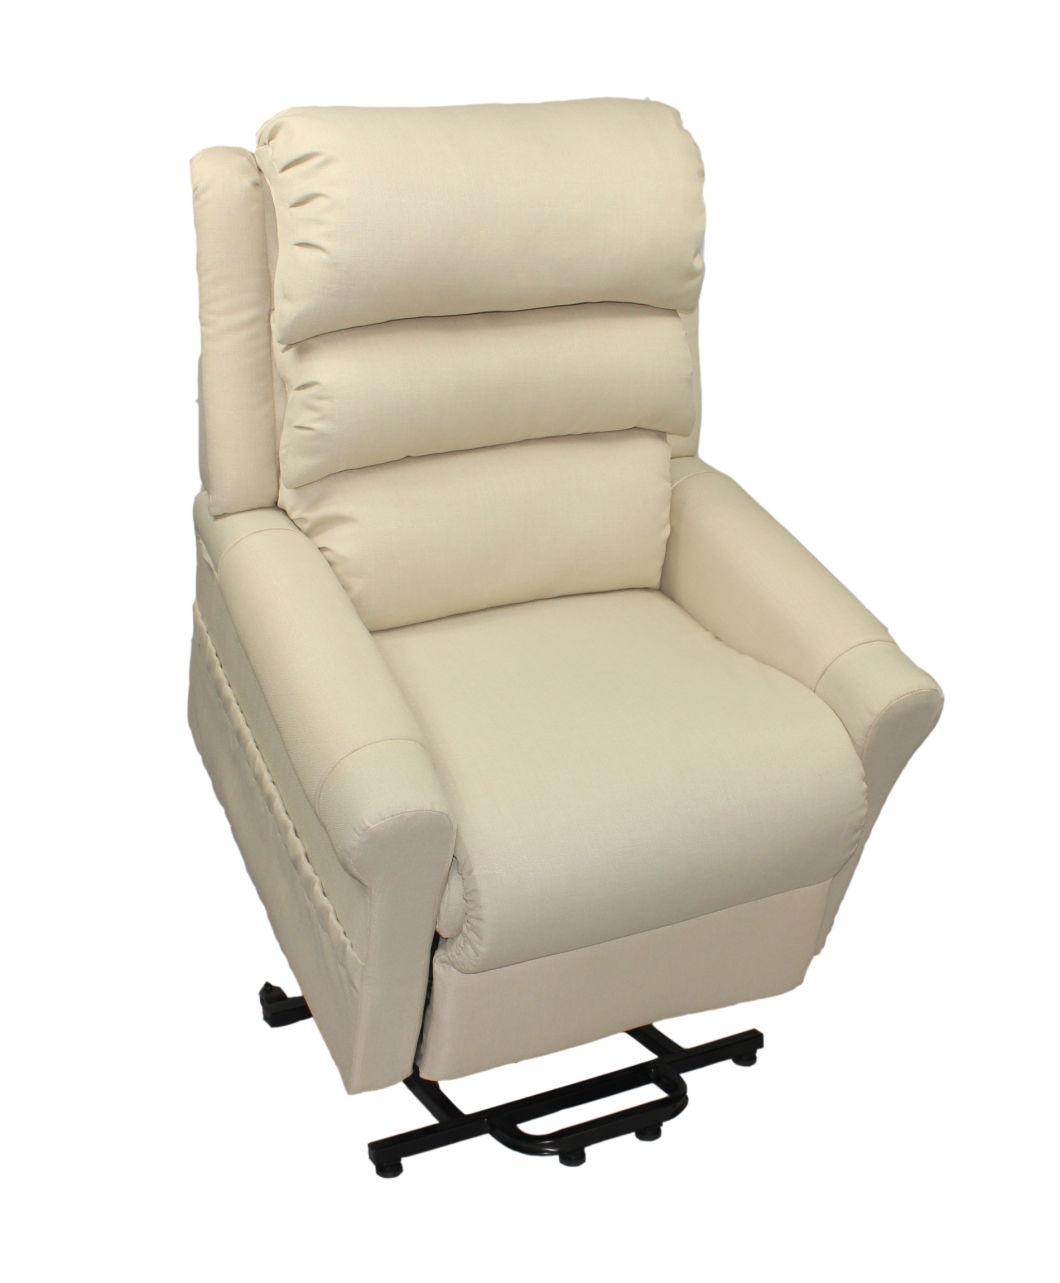 Elder Electric Adjustable Lift Massage Sofa Chair, Powerful Recliner